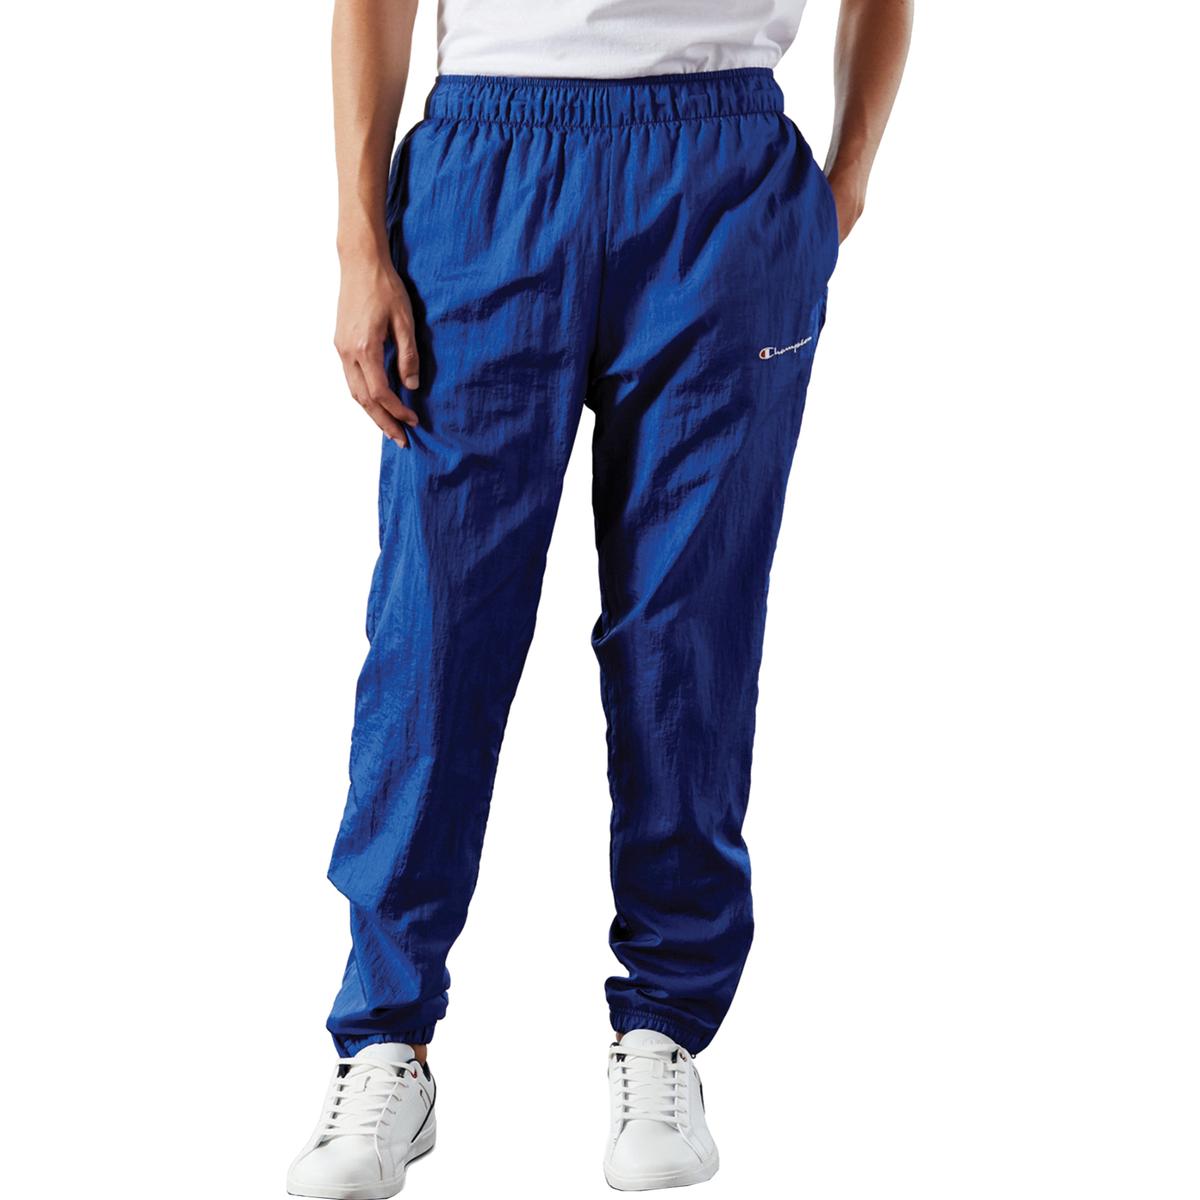 Champion Mens Blue Track Pants XL BHFO 6793 | eBay